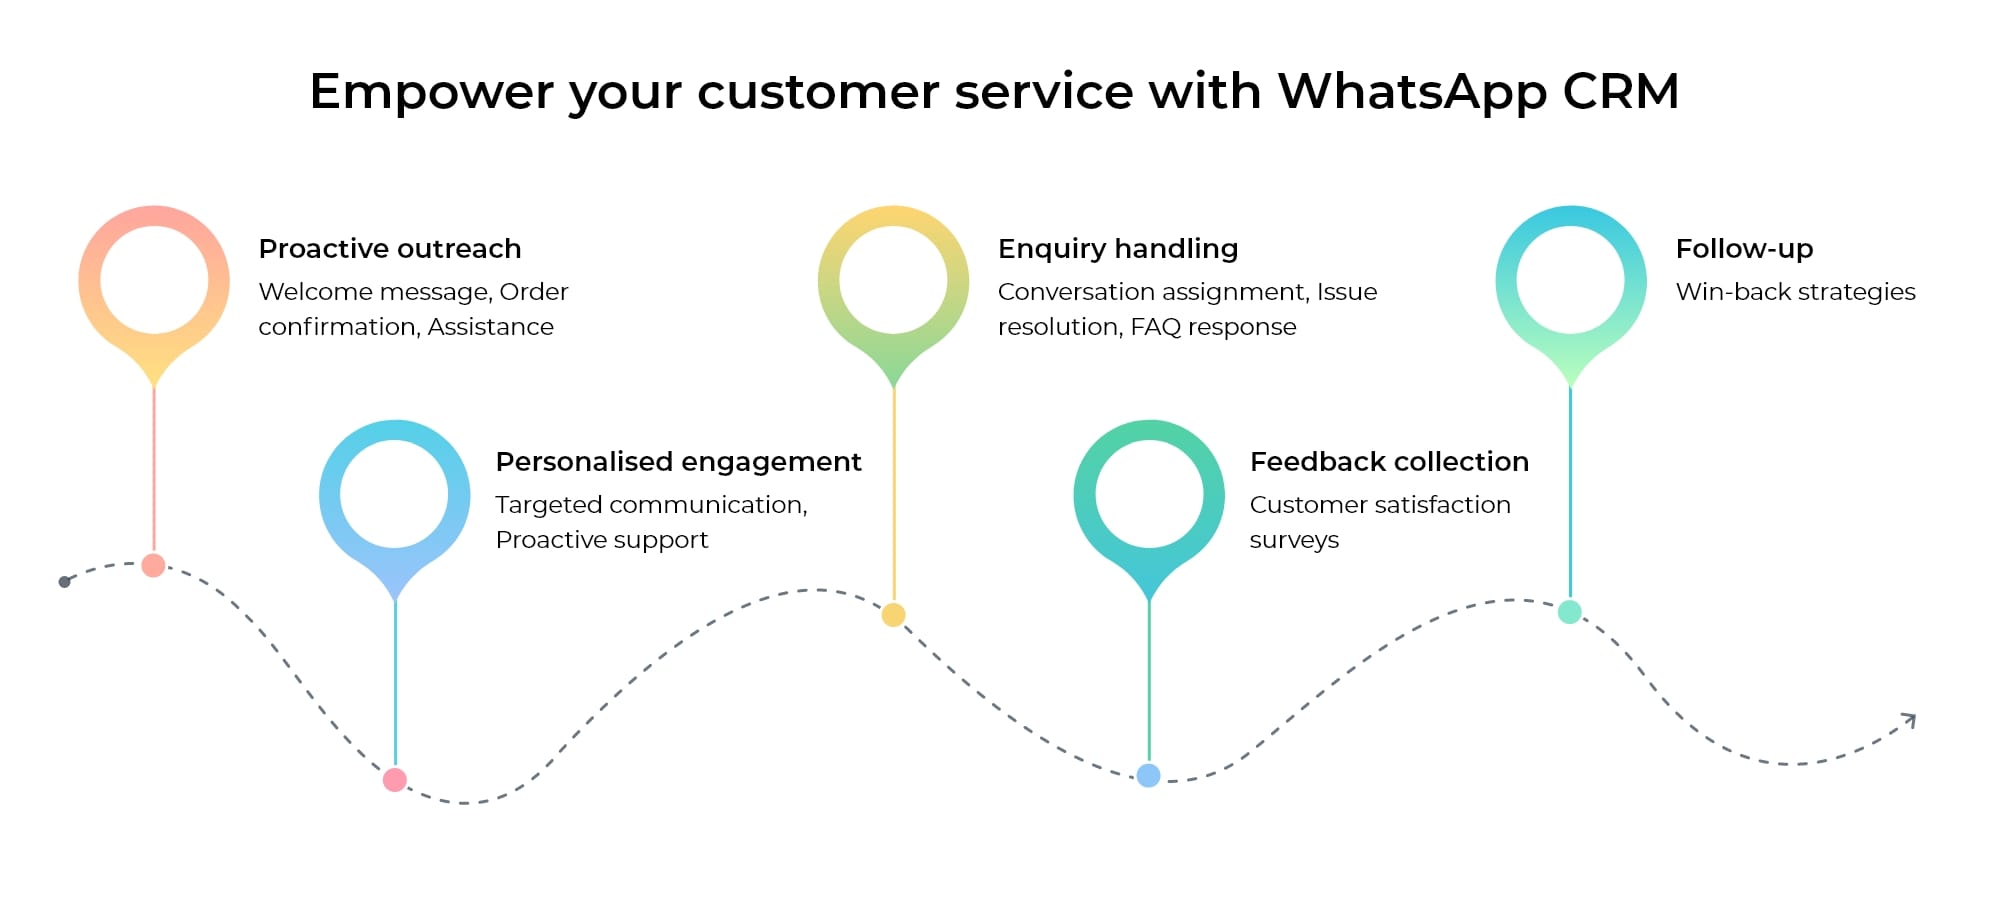 Customer service via WhatsApp CRM